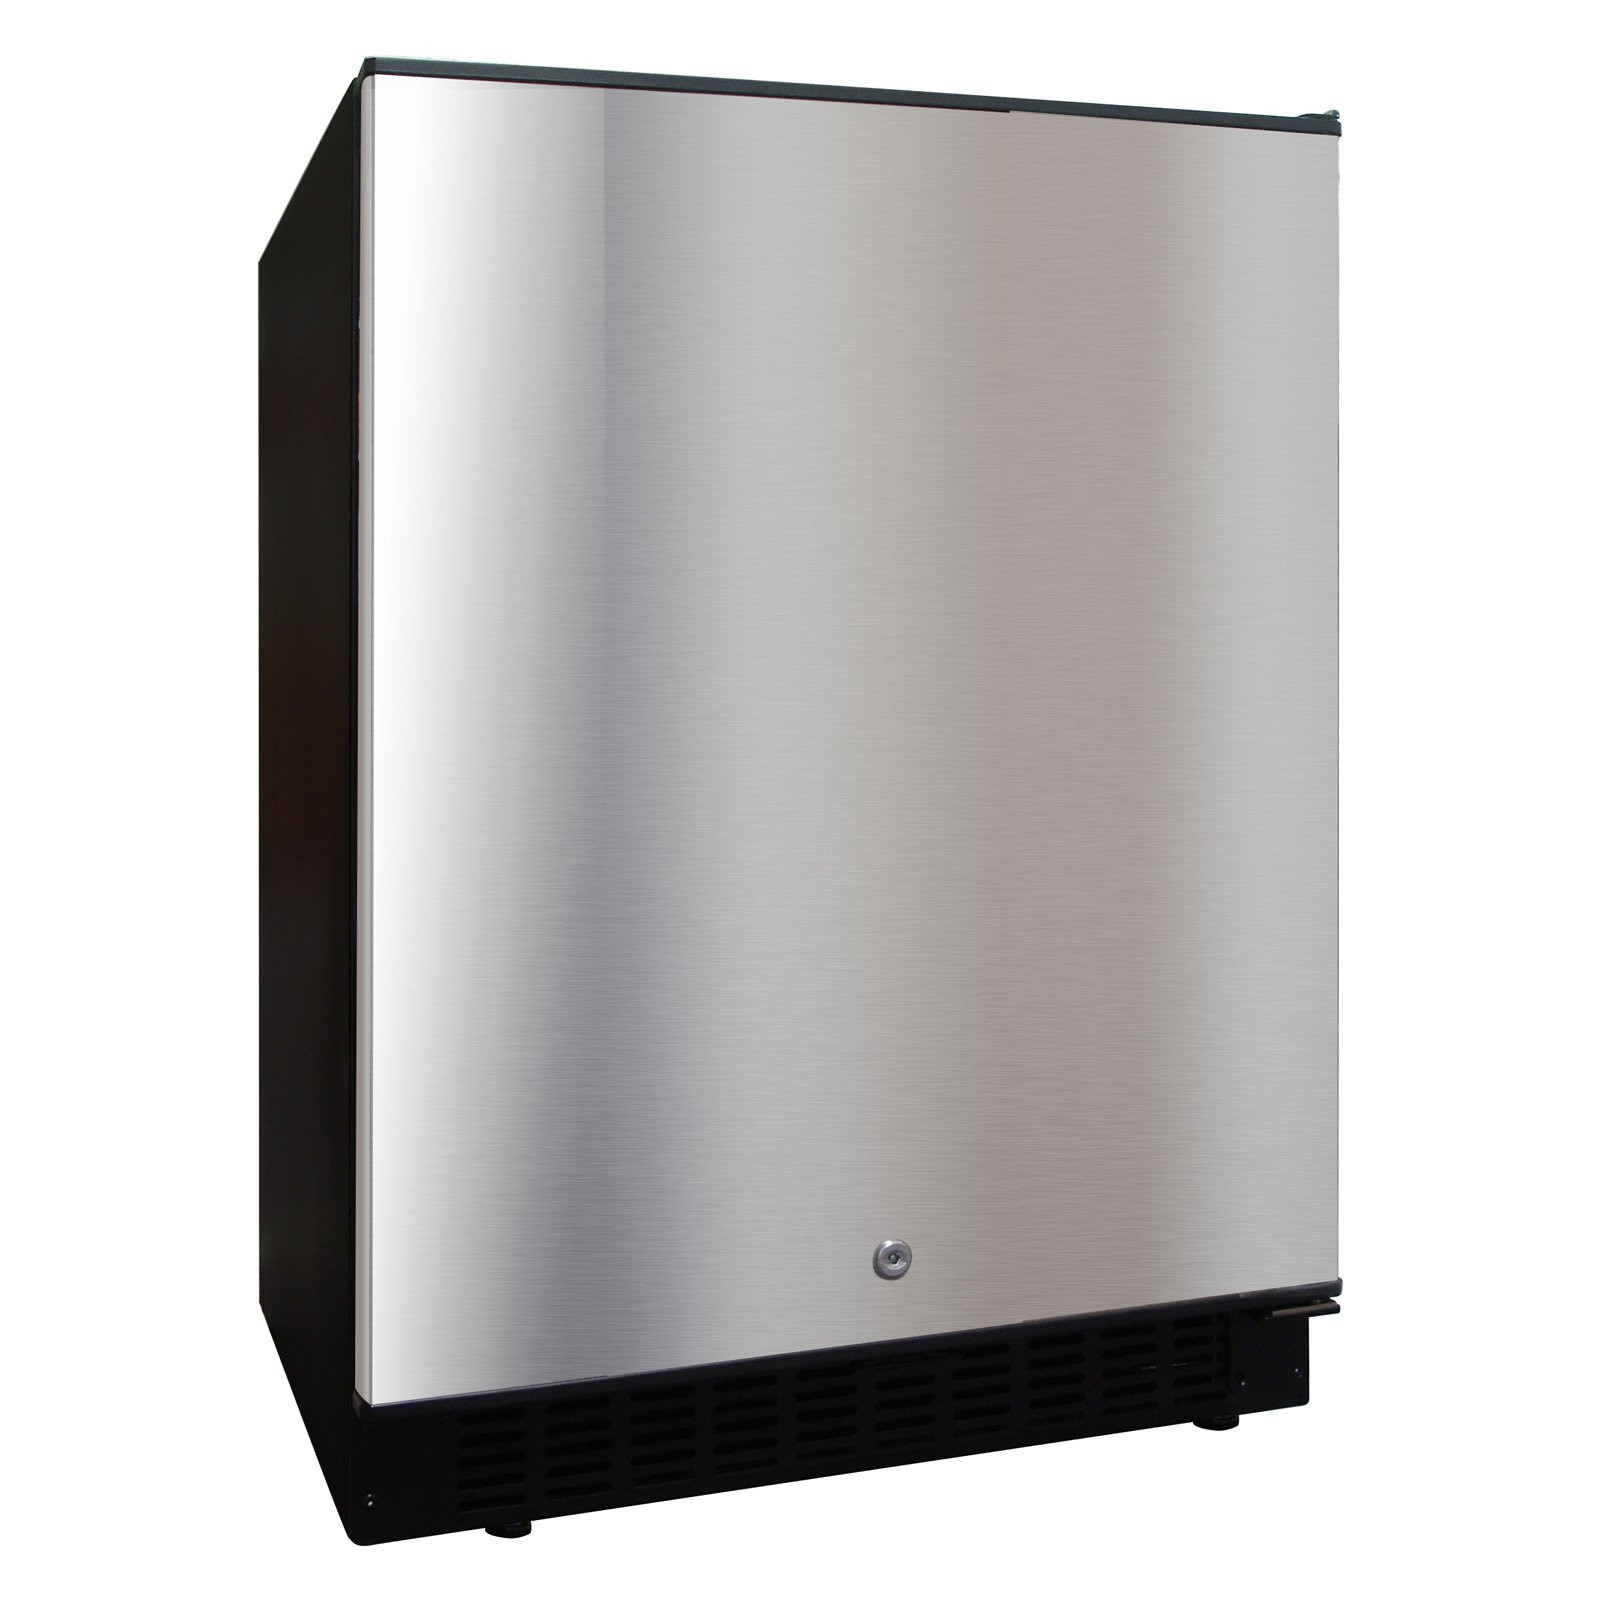 Outdoor Kitchen Refrigerator
 Vinotemp 5 12 cu ft Outdoor Refrigerator Specialty